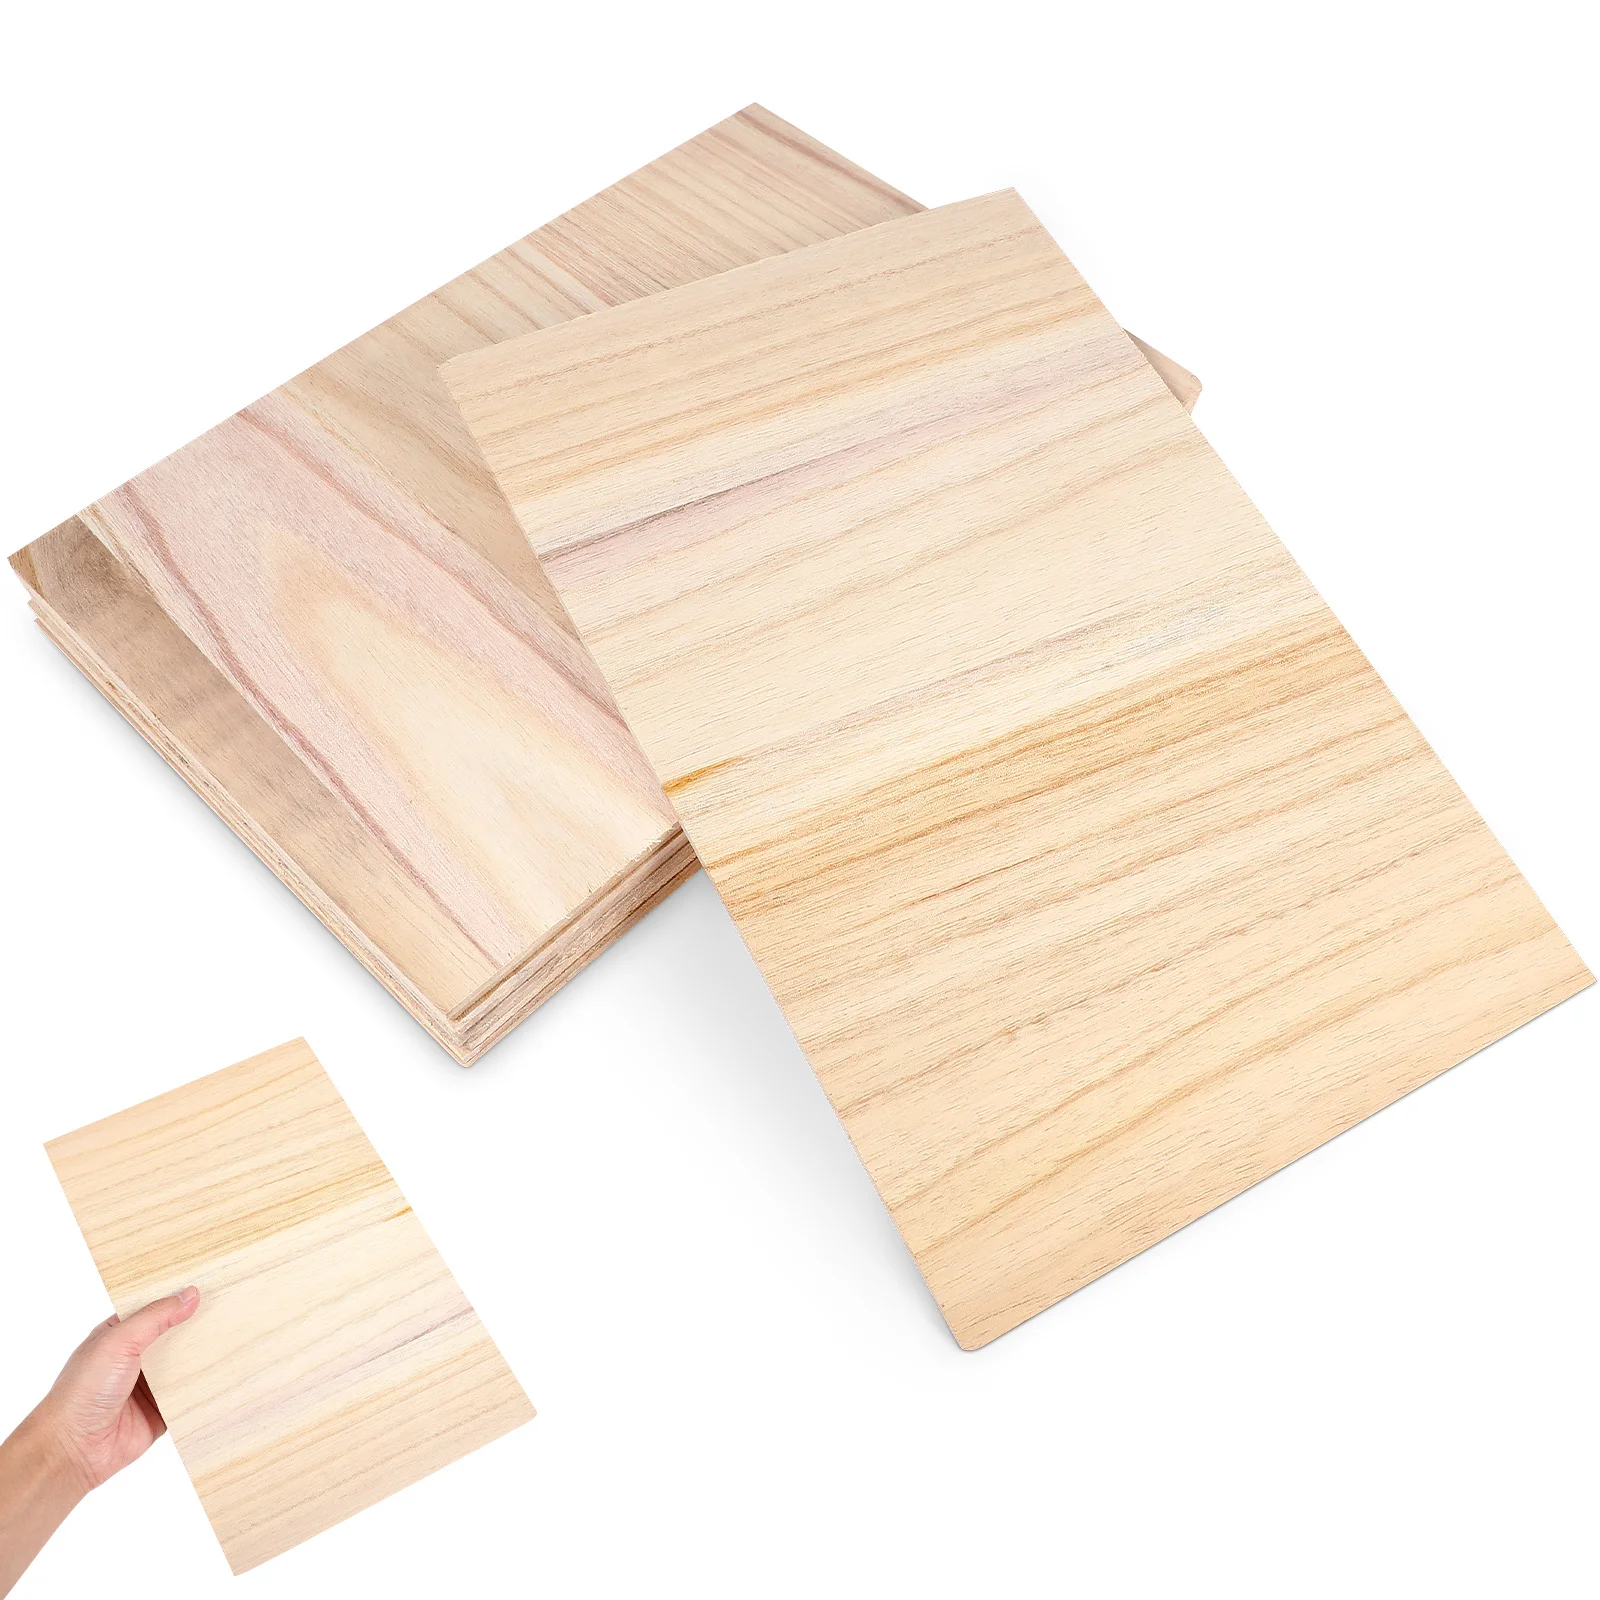 

10 Pcs Taekwondo Plank Breaking Board Wooden Accessories Breakable Boards Punching Training Martial